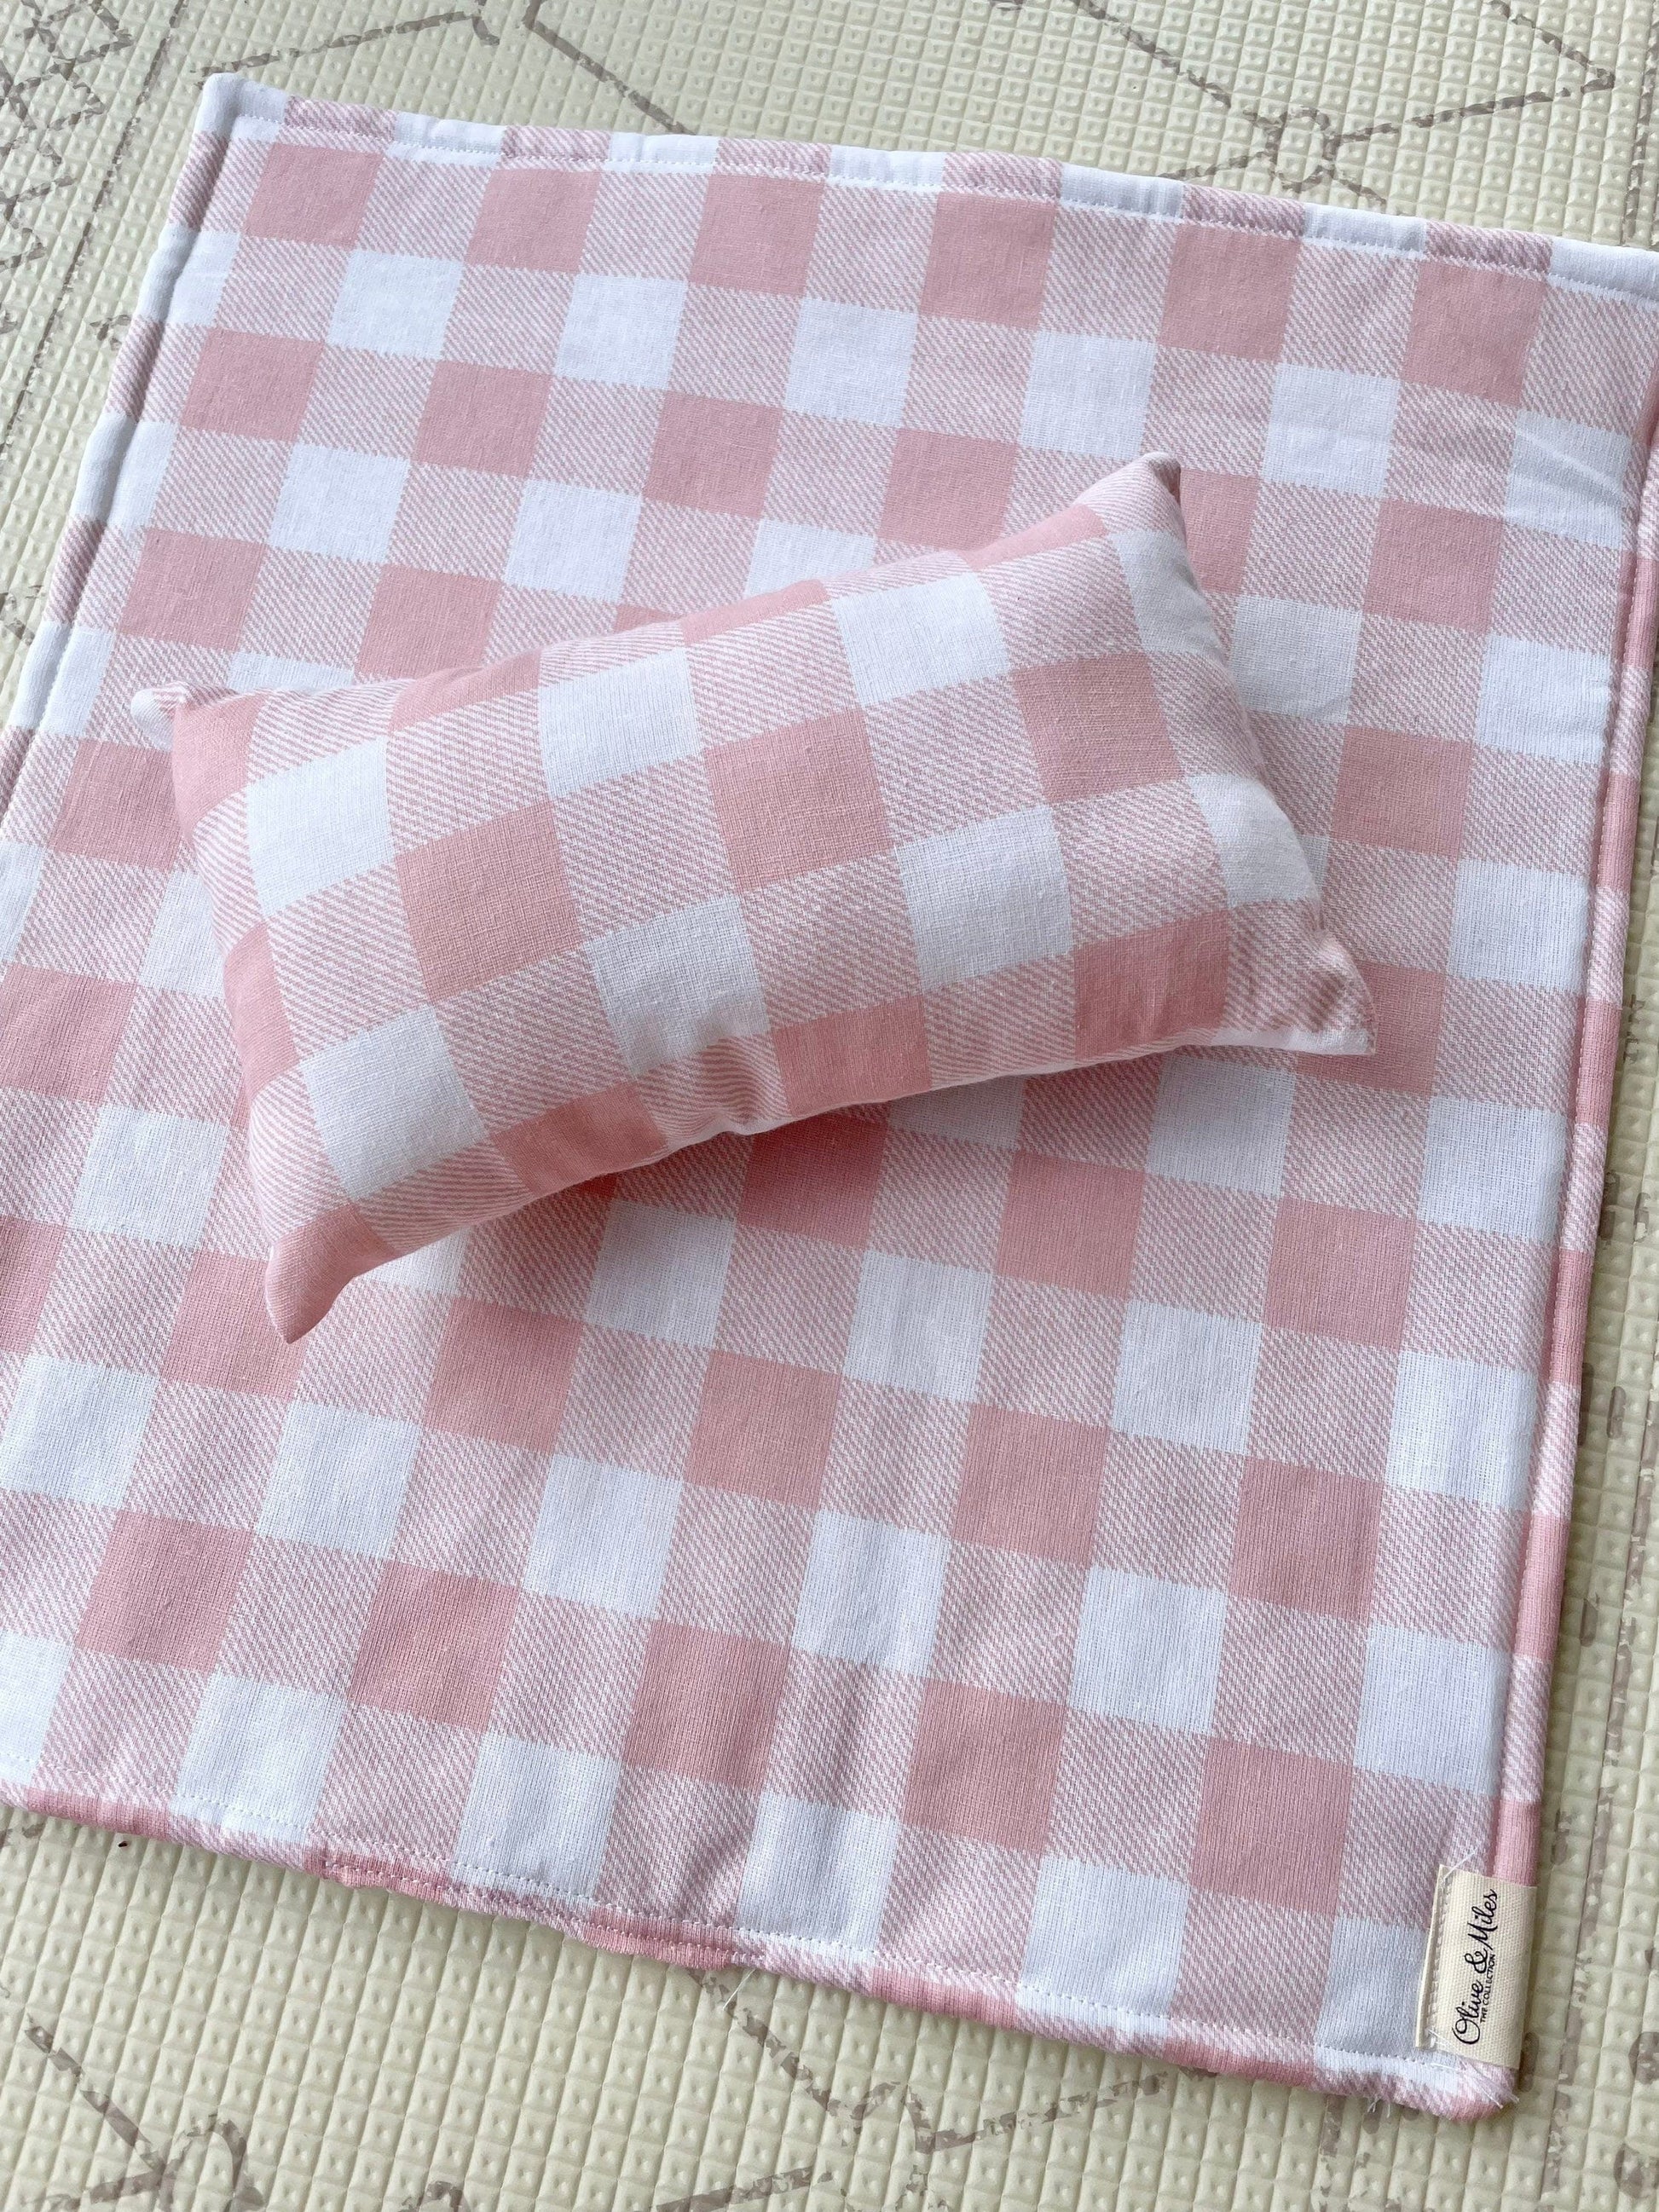 Dolls Linen Set Pink Gingham Bedding - doll crib blanket